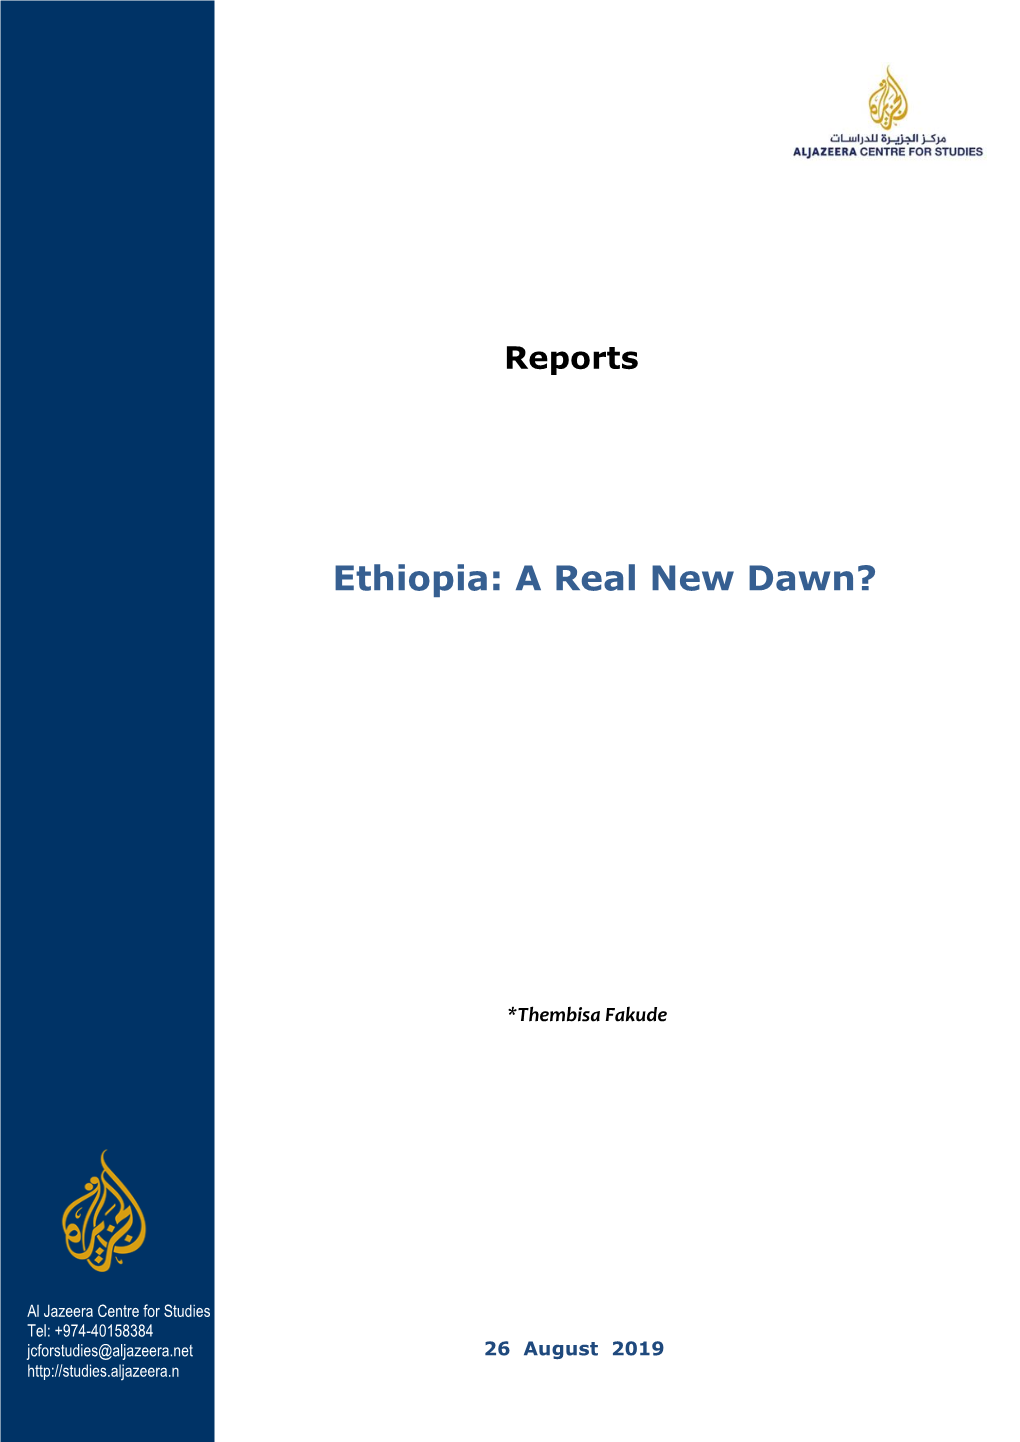 Ethiopia: a Real New Dawn?